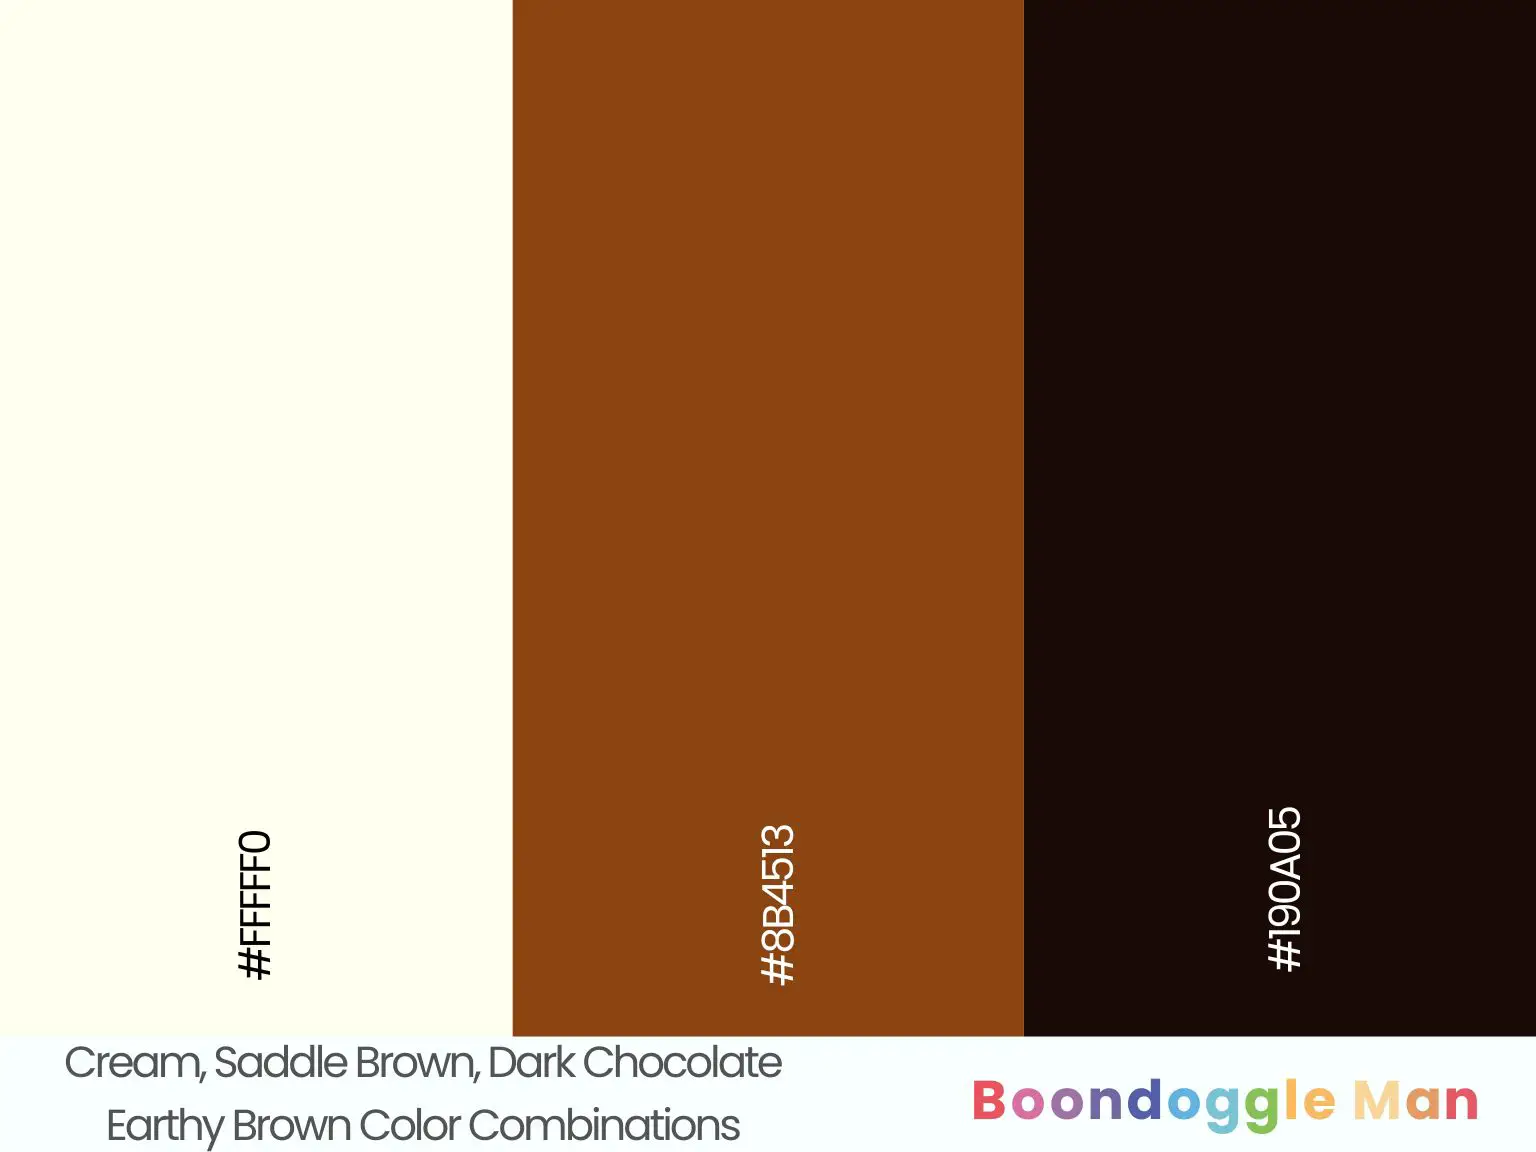 Cream, Saddle Brown, Dark Chocolate